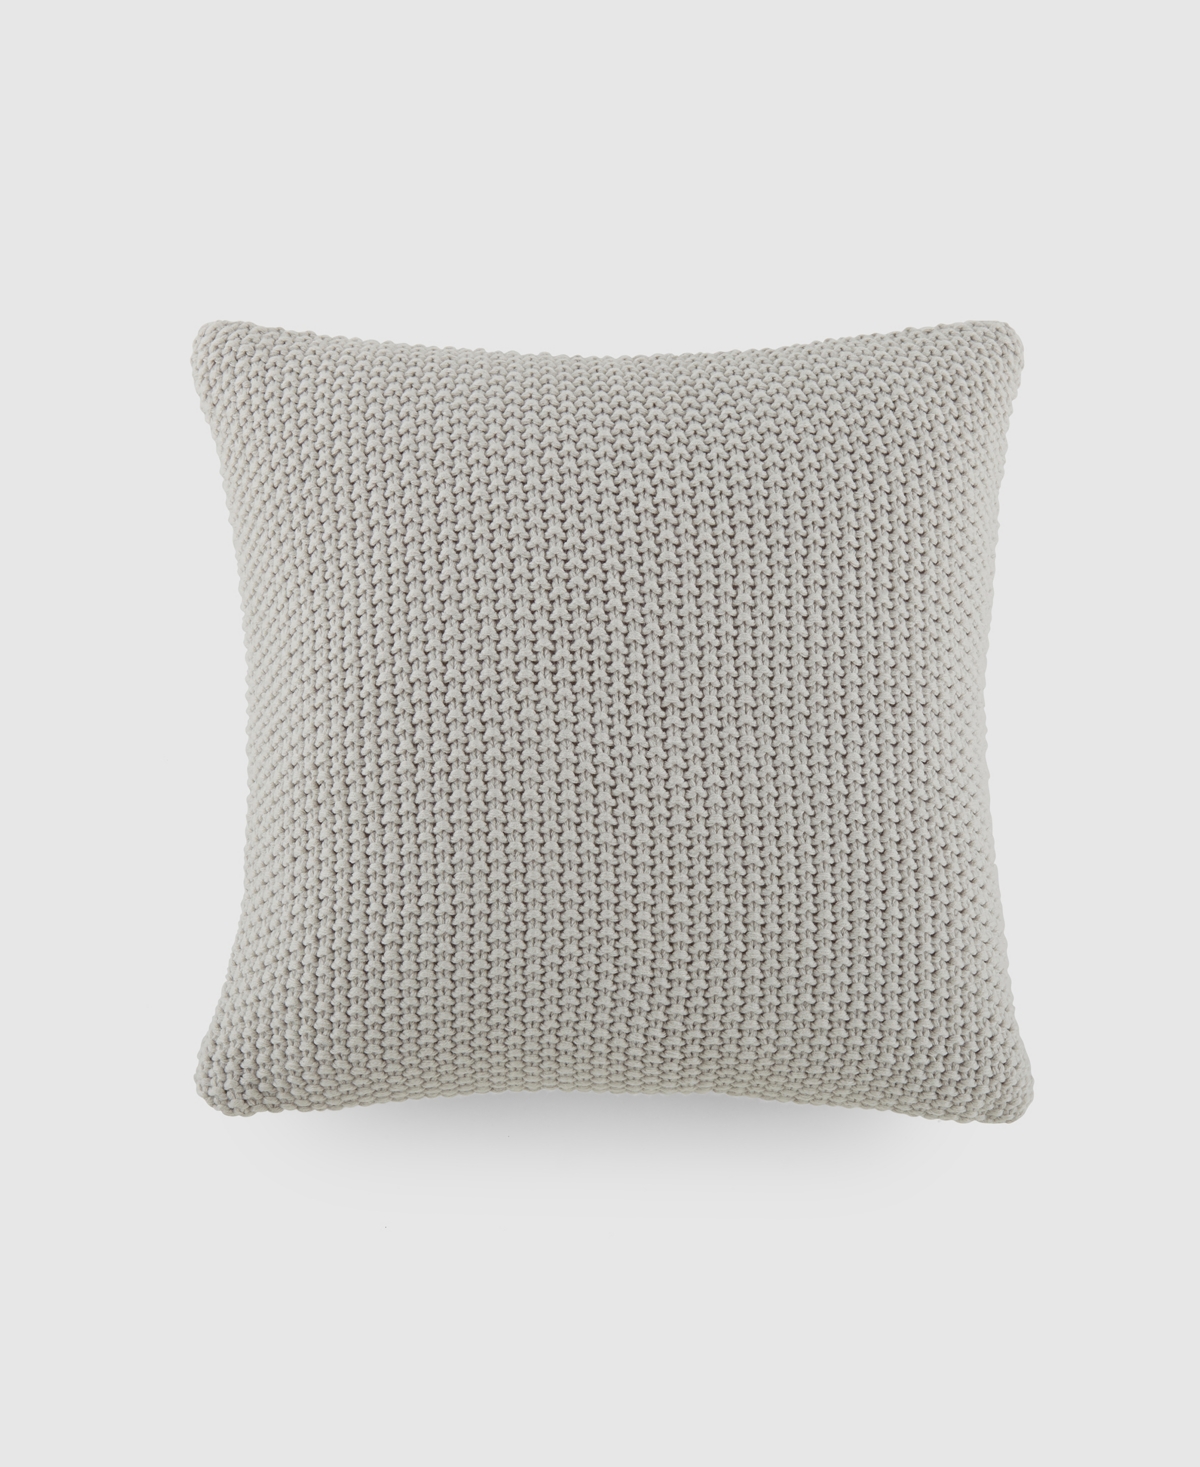 Ienjoy Home Stitch Knit Decorative Pillow, 20" X 20" In Light Gray